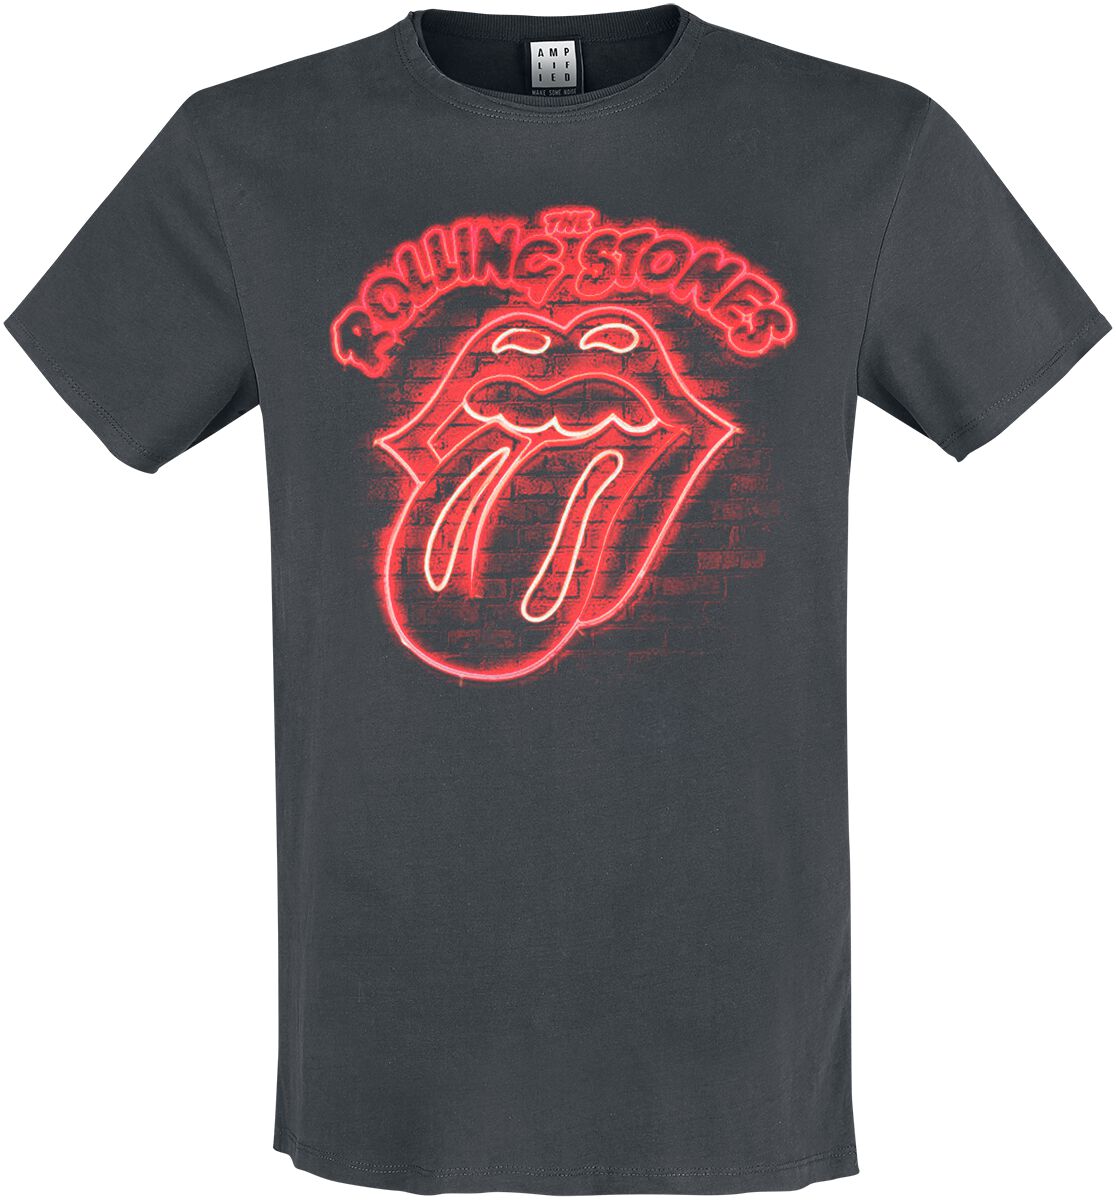 The Rolling Stones T-Shirt - Amplified Collection - Neon Light - S bis XL - für Männer - Größe M - charcoal  - Lizenziertes Merchandise!